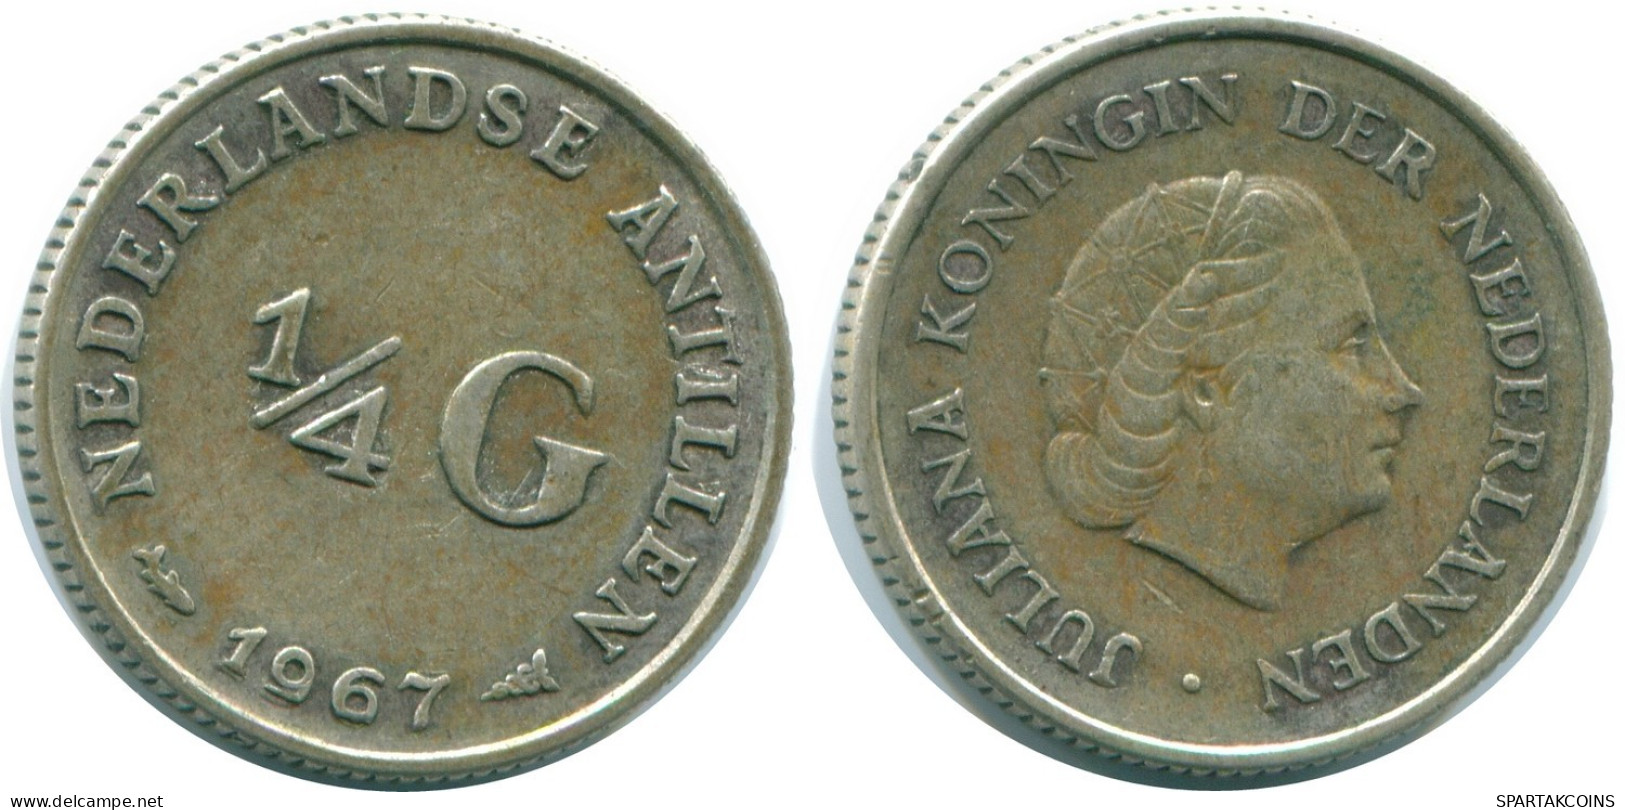 1/4 GULDEN 1967 NETHERLANDS ANTILLES SILVER Colonial Coin #NL11581.4.U.A - Antille Olandesi